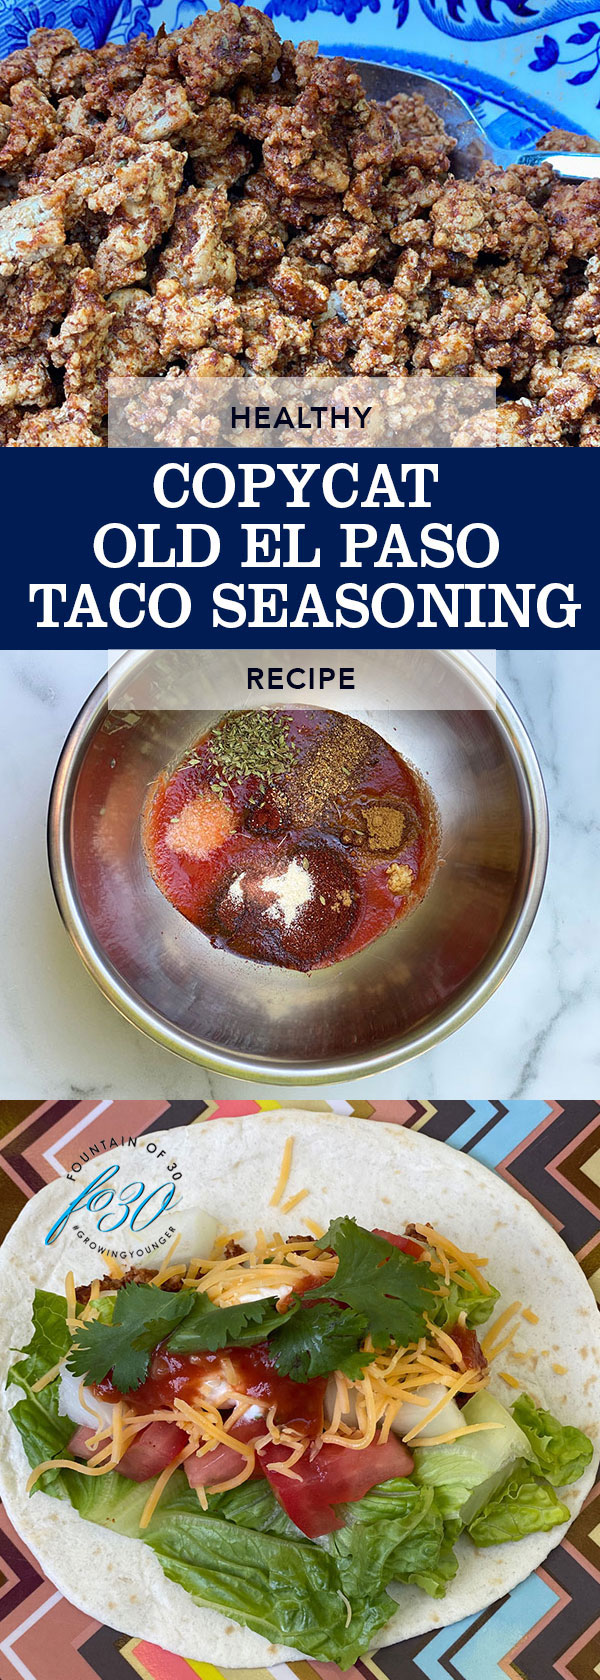 copycat taco seasoning recipe fountainof30